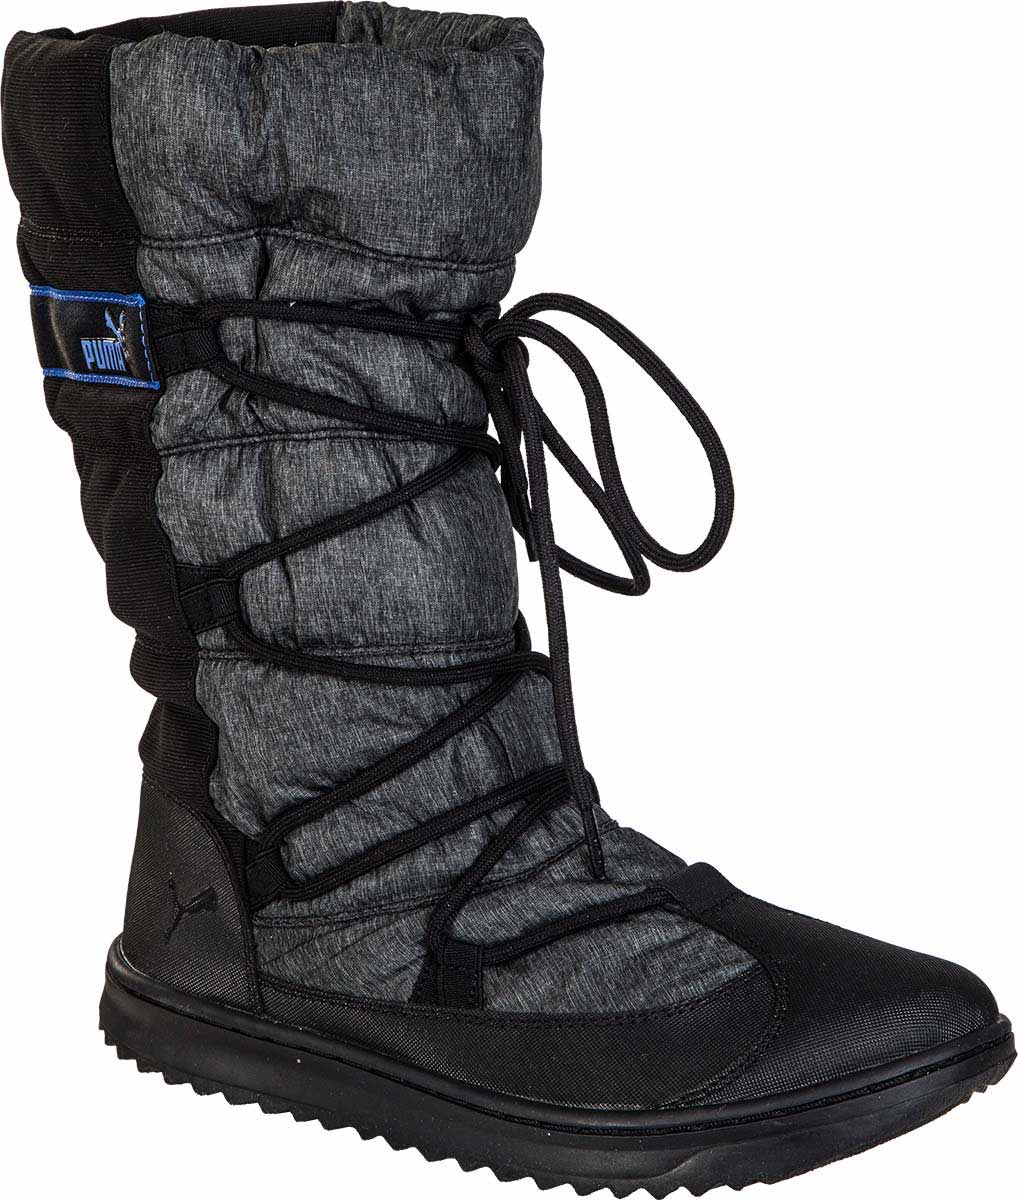 SNOW NYLON 2 BOOT WNS - Women's winter shoes